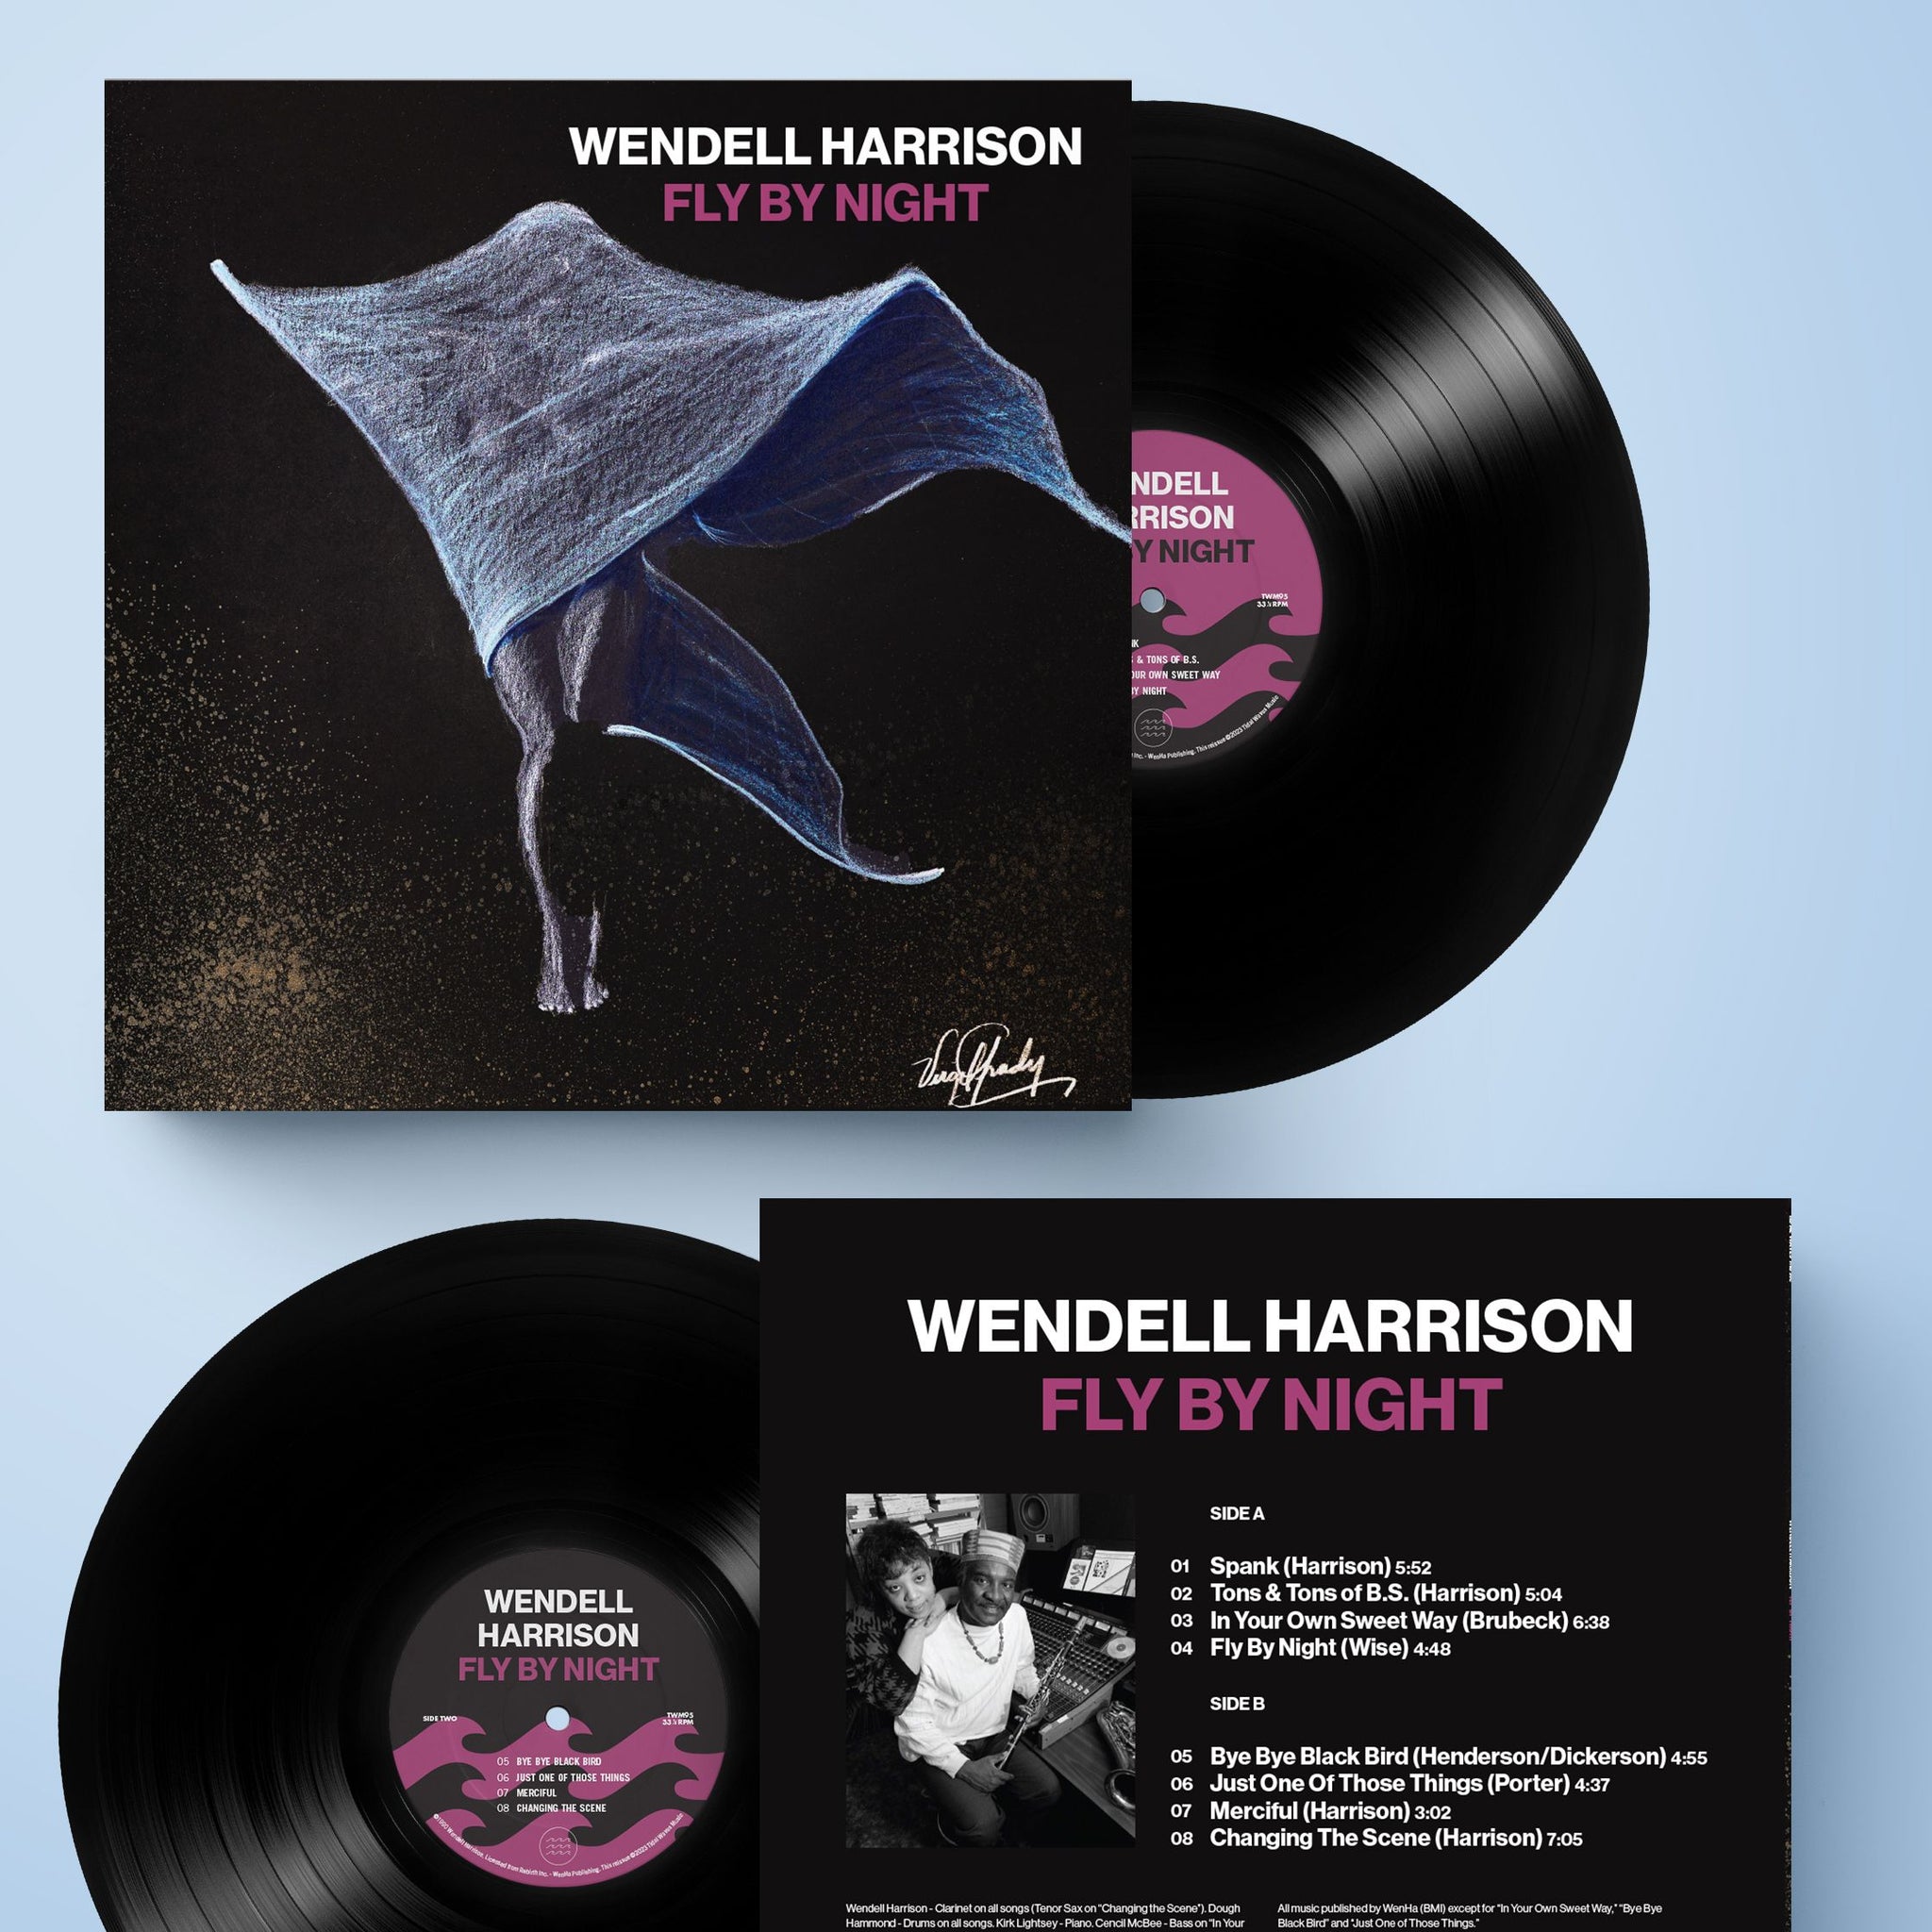 WENDELL HARRISON - Fly By Night - LP - Vinyl [RSD23]